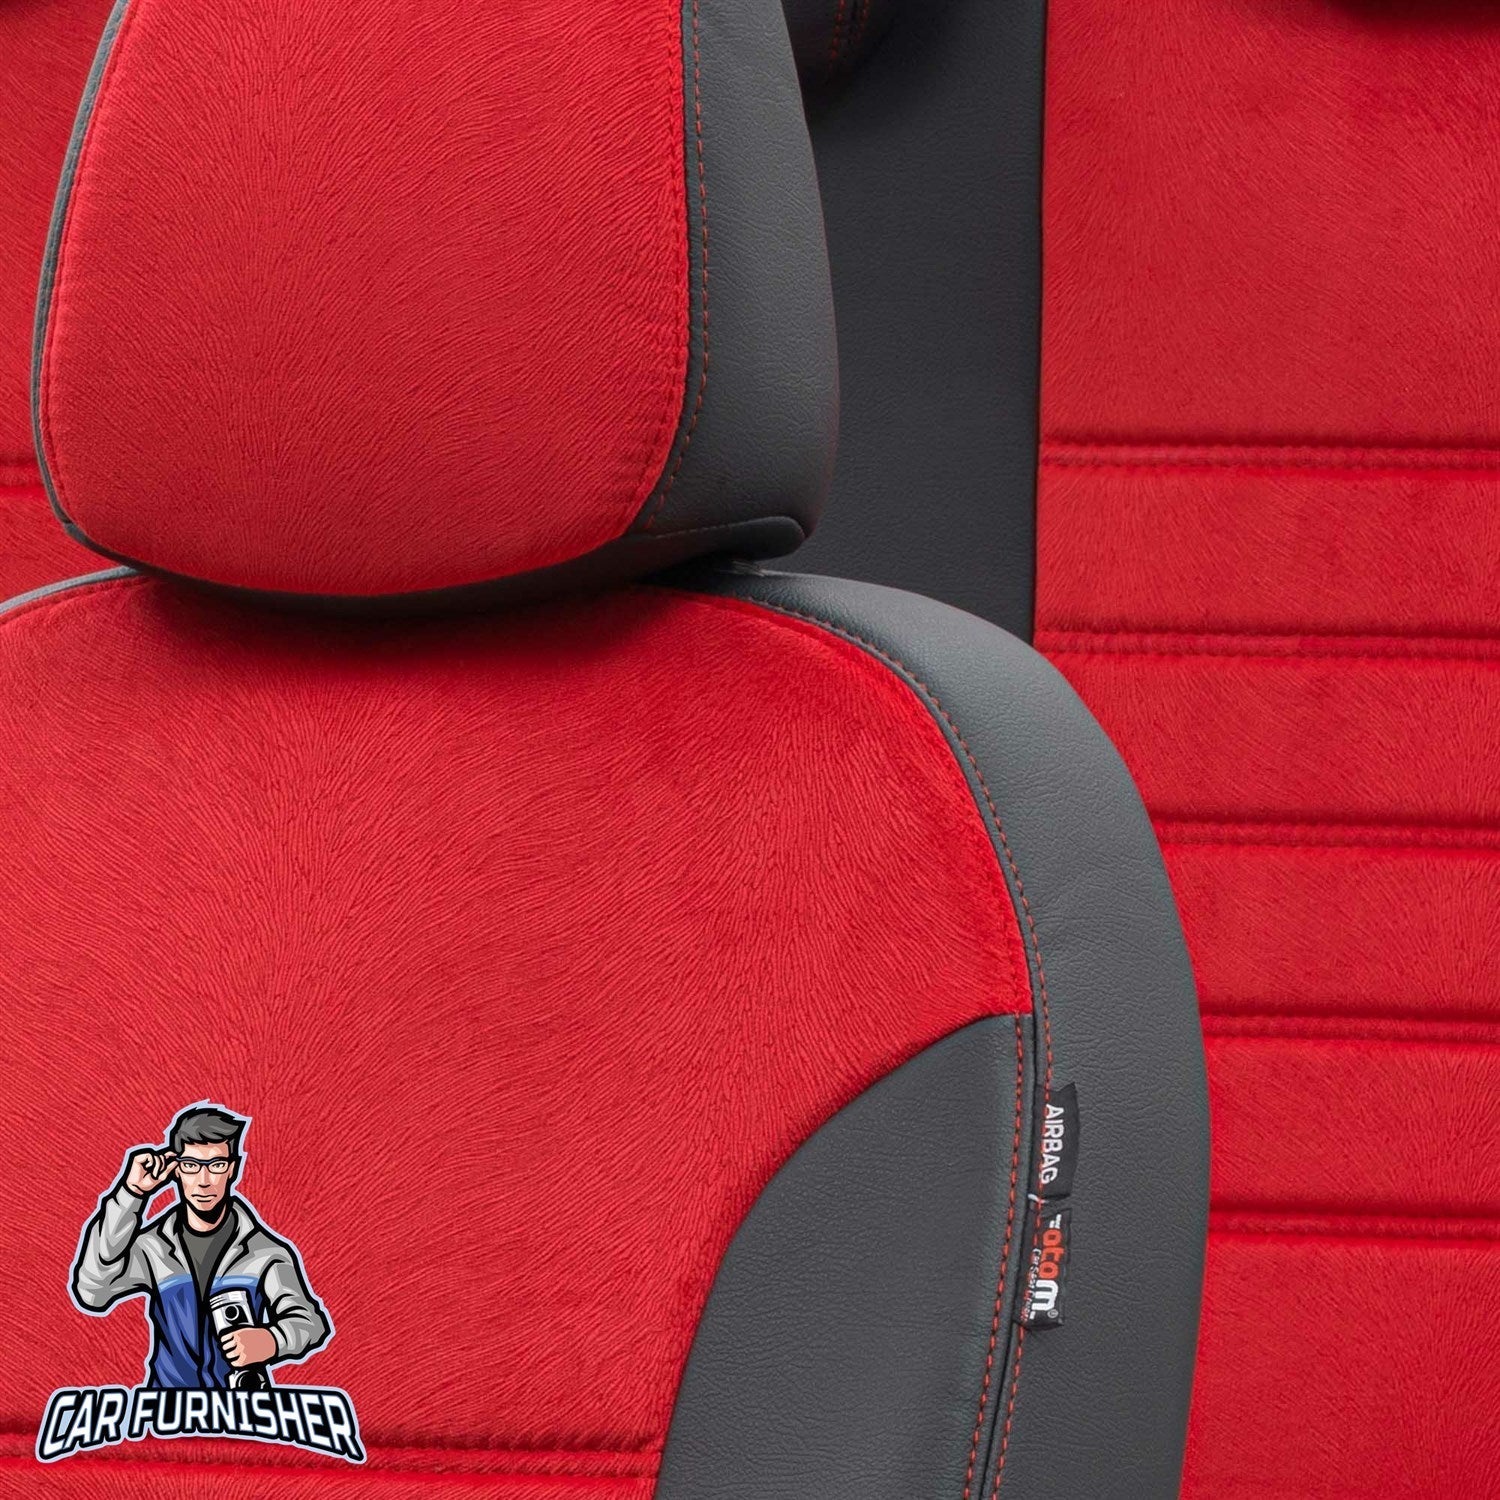 Alfa Romeo Giulietta Seat Cover London Foal Feather Design Red Leather & Foal Feather